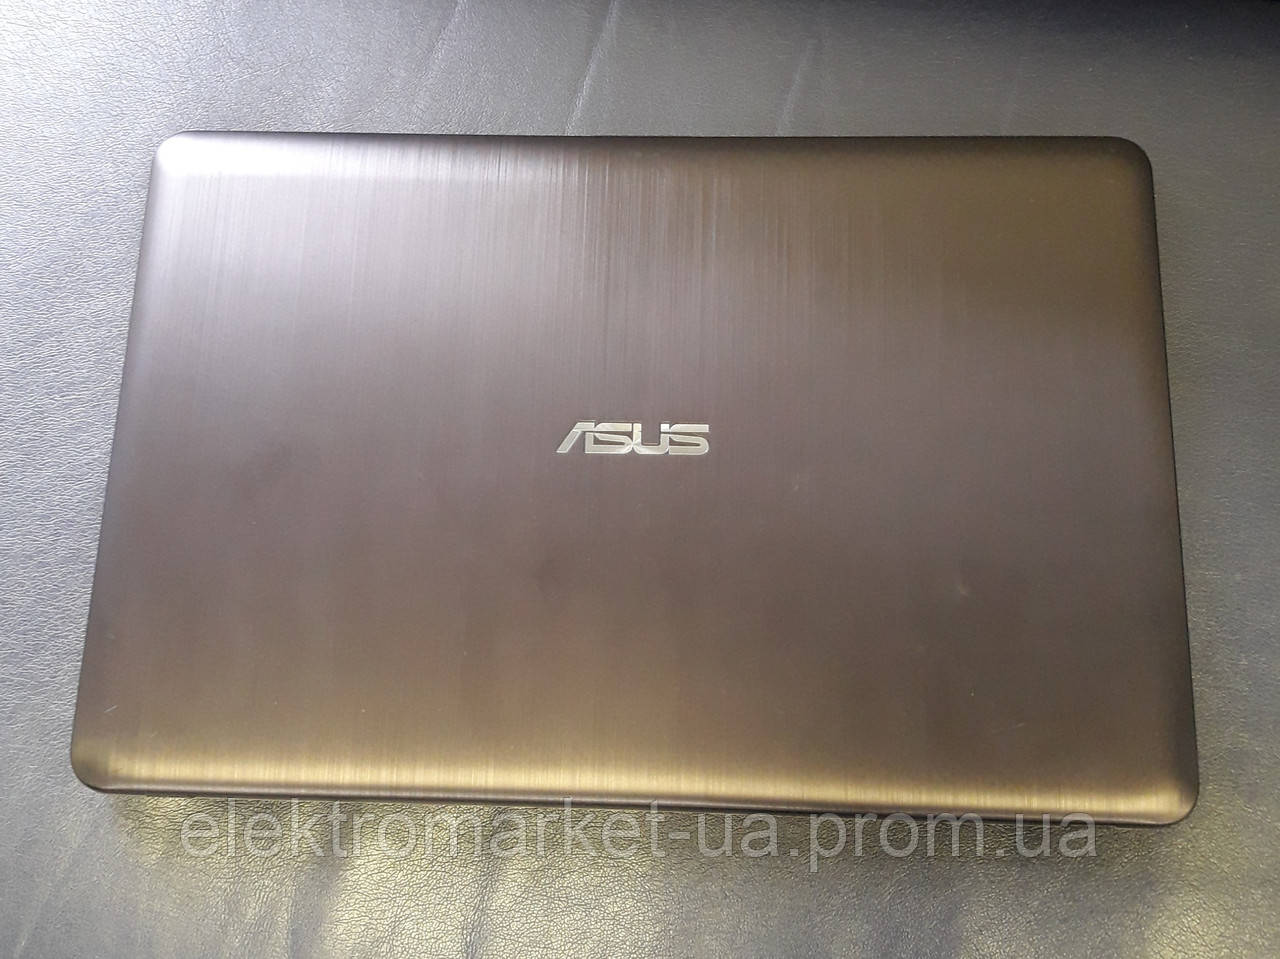 Цена Ноутбука Асус R540s